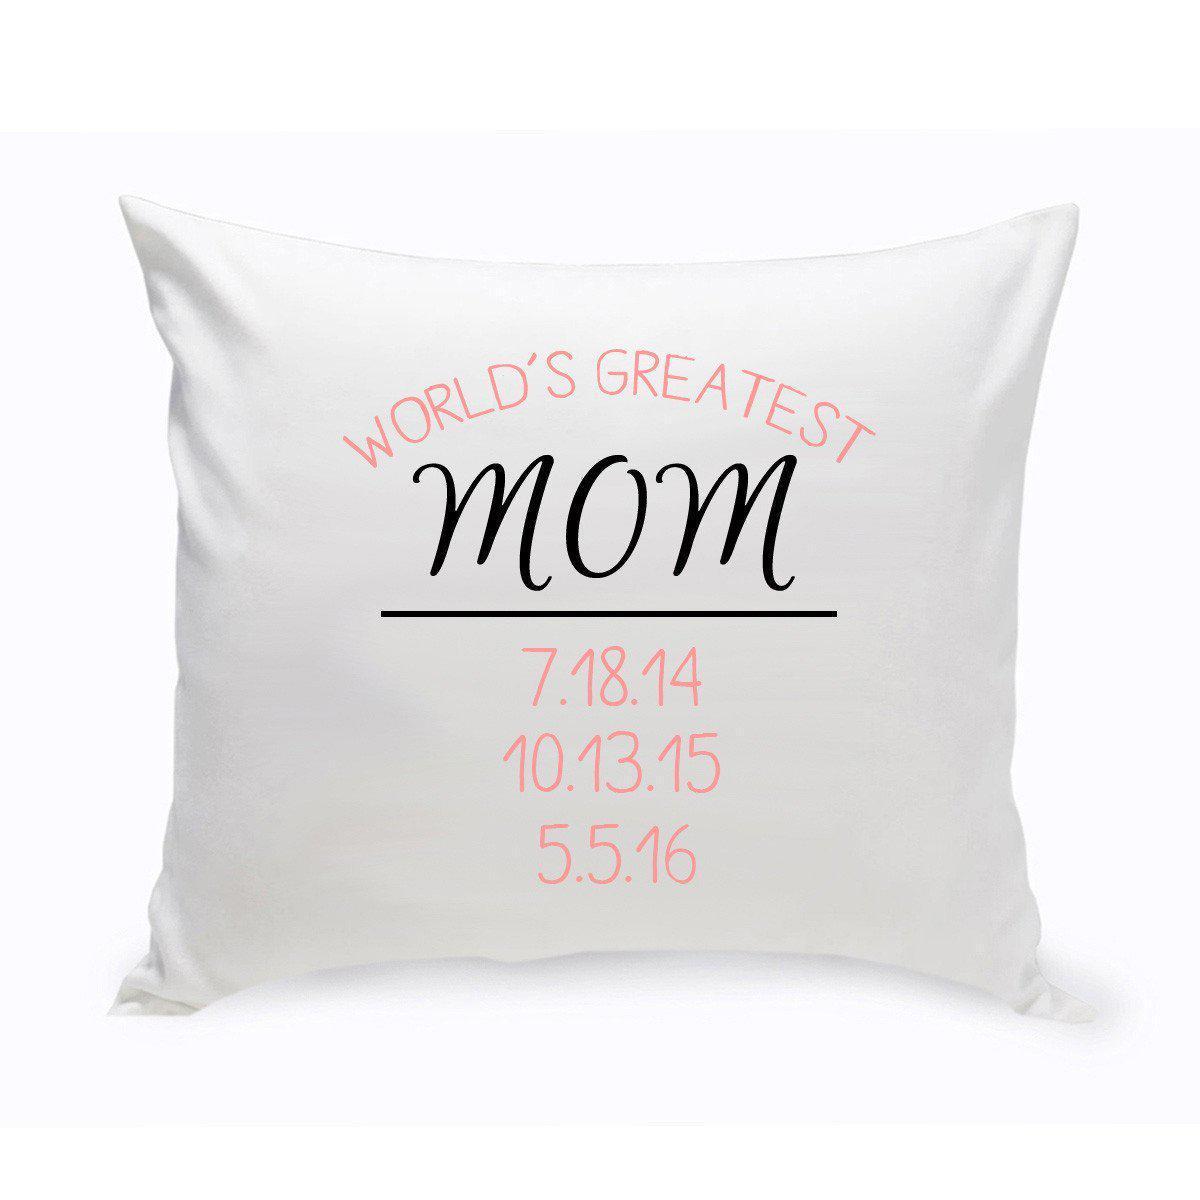 World's Greatest Mom Throw Pillow